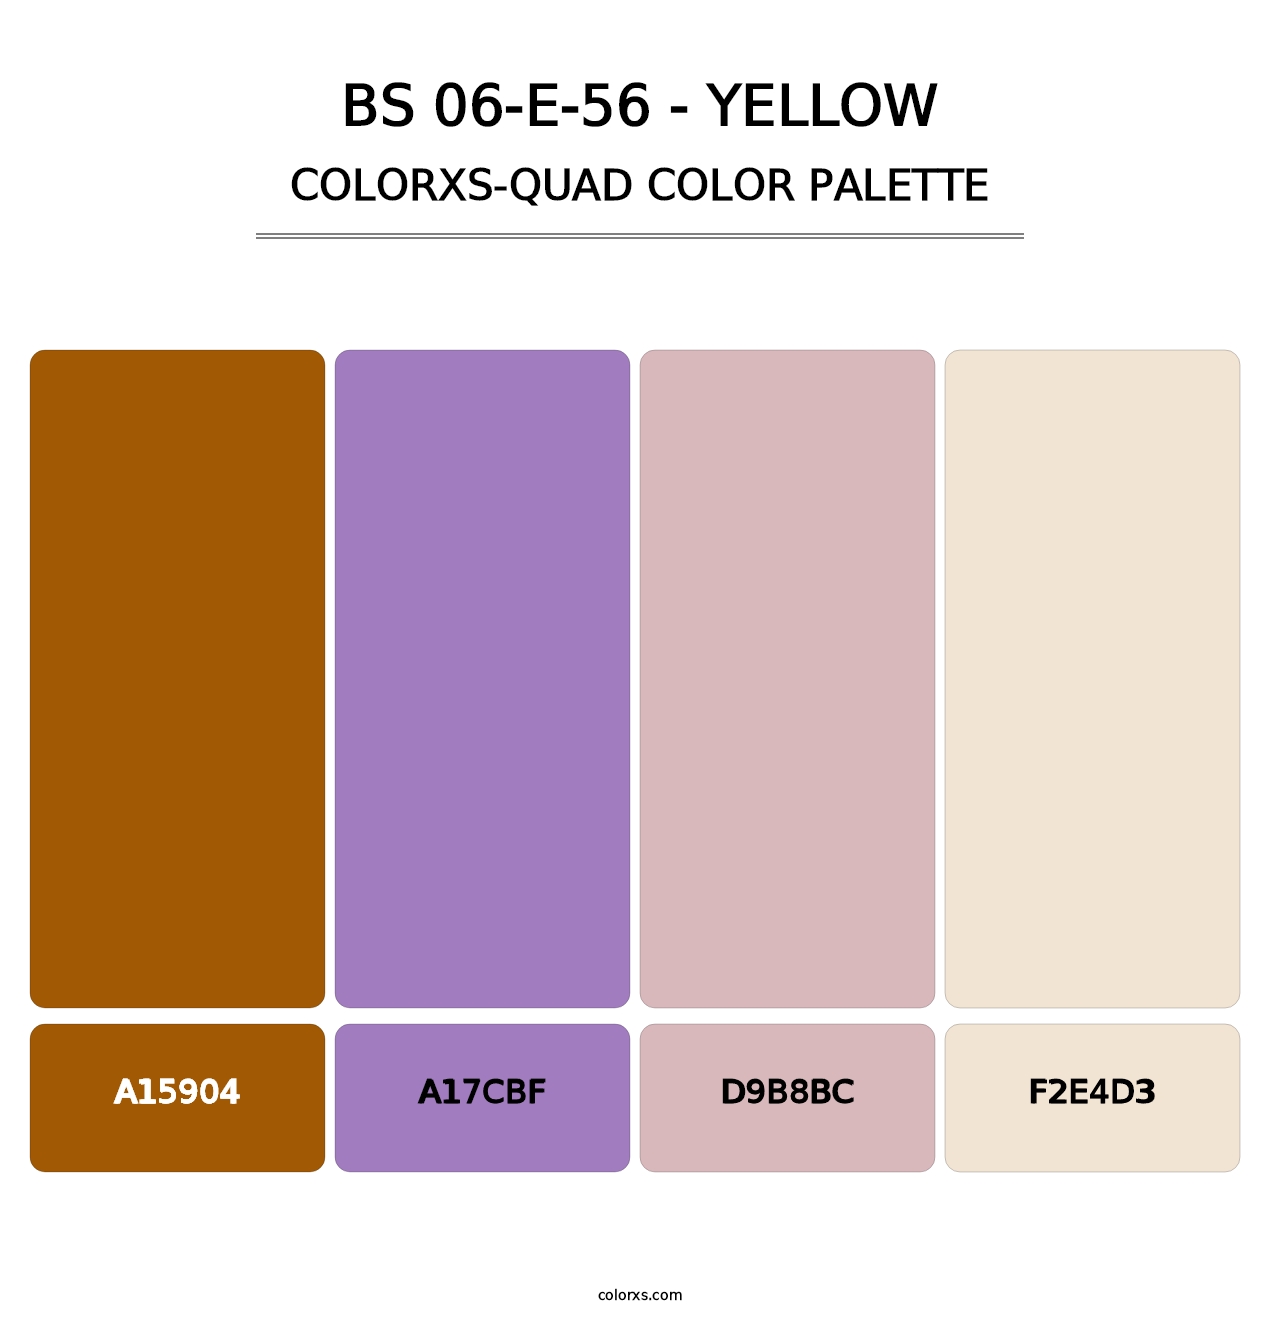 BS 06-E-56 - Yellow - Colorxs Quad Palette